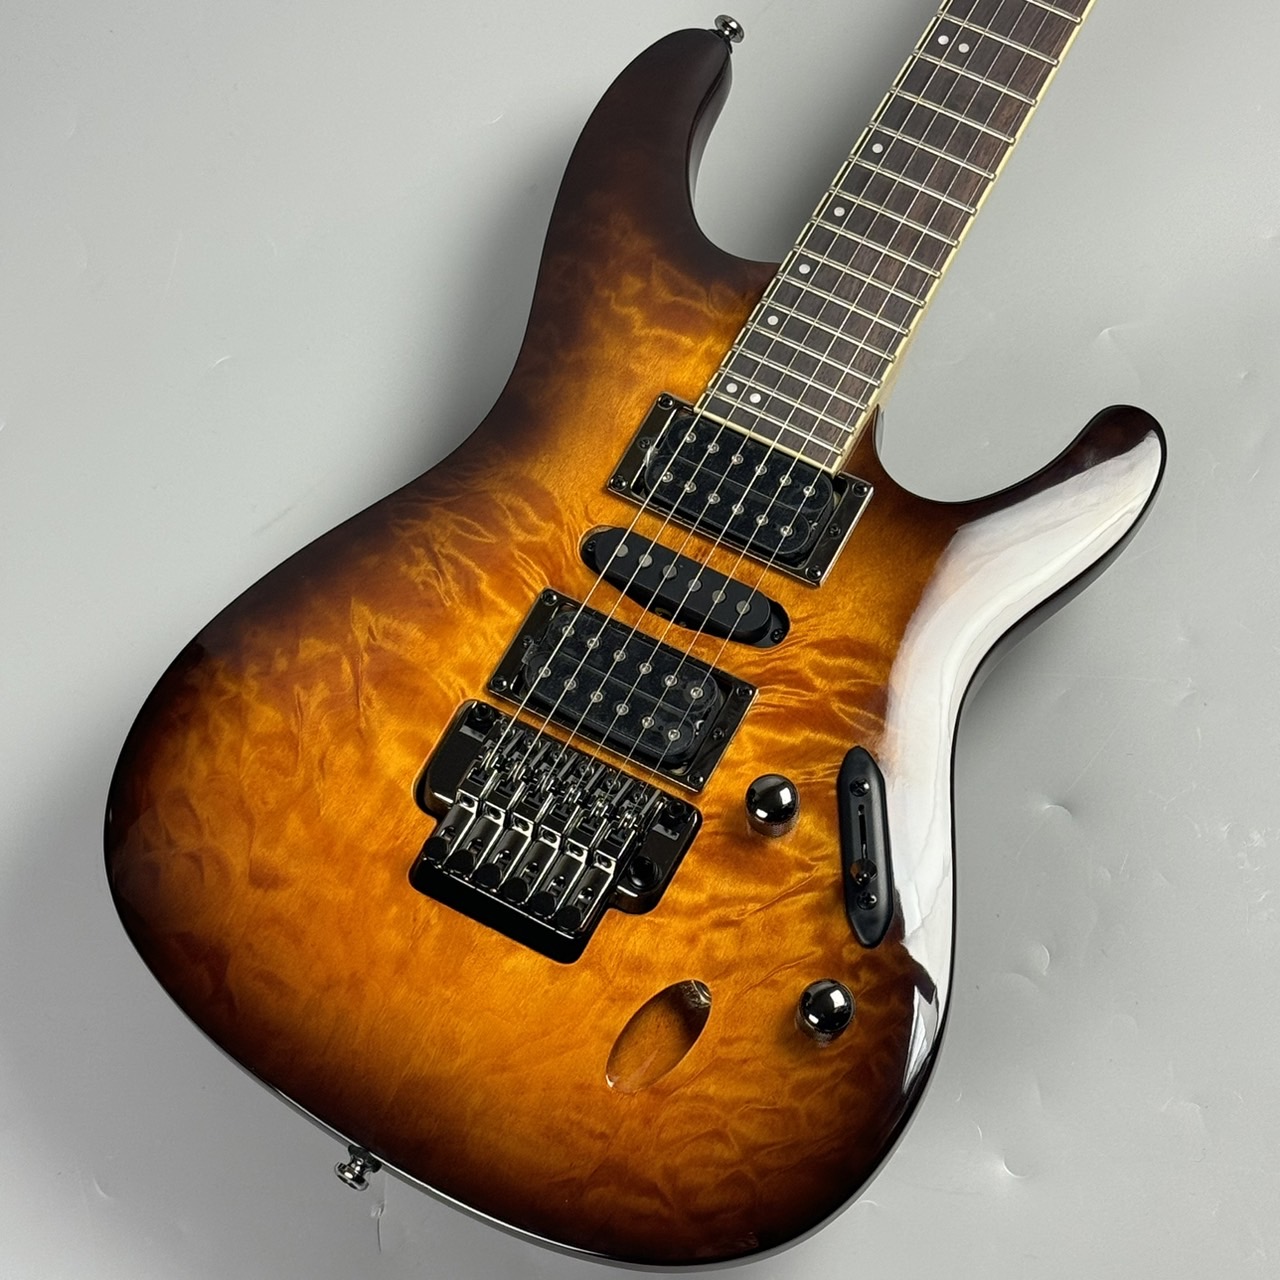 Ibanez アイバニーズ S670QM DEB エレキギター - 楽器/器材